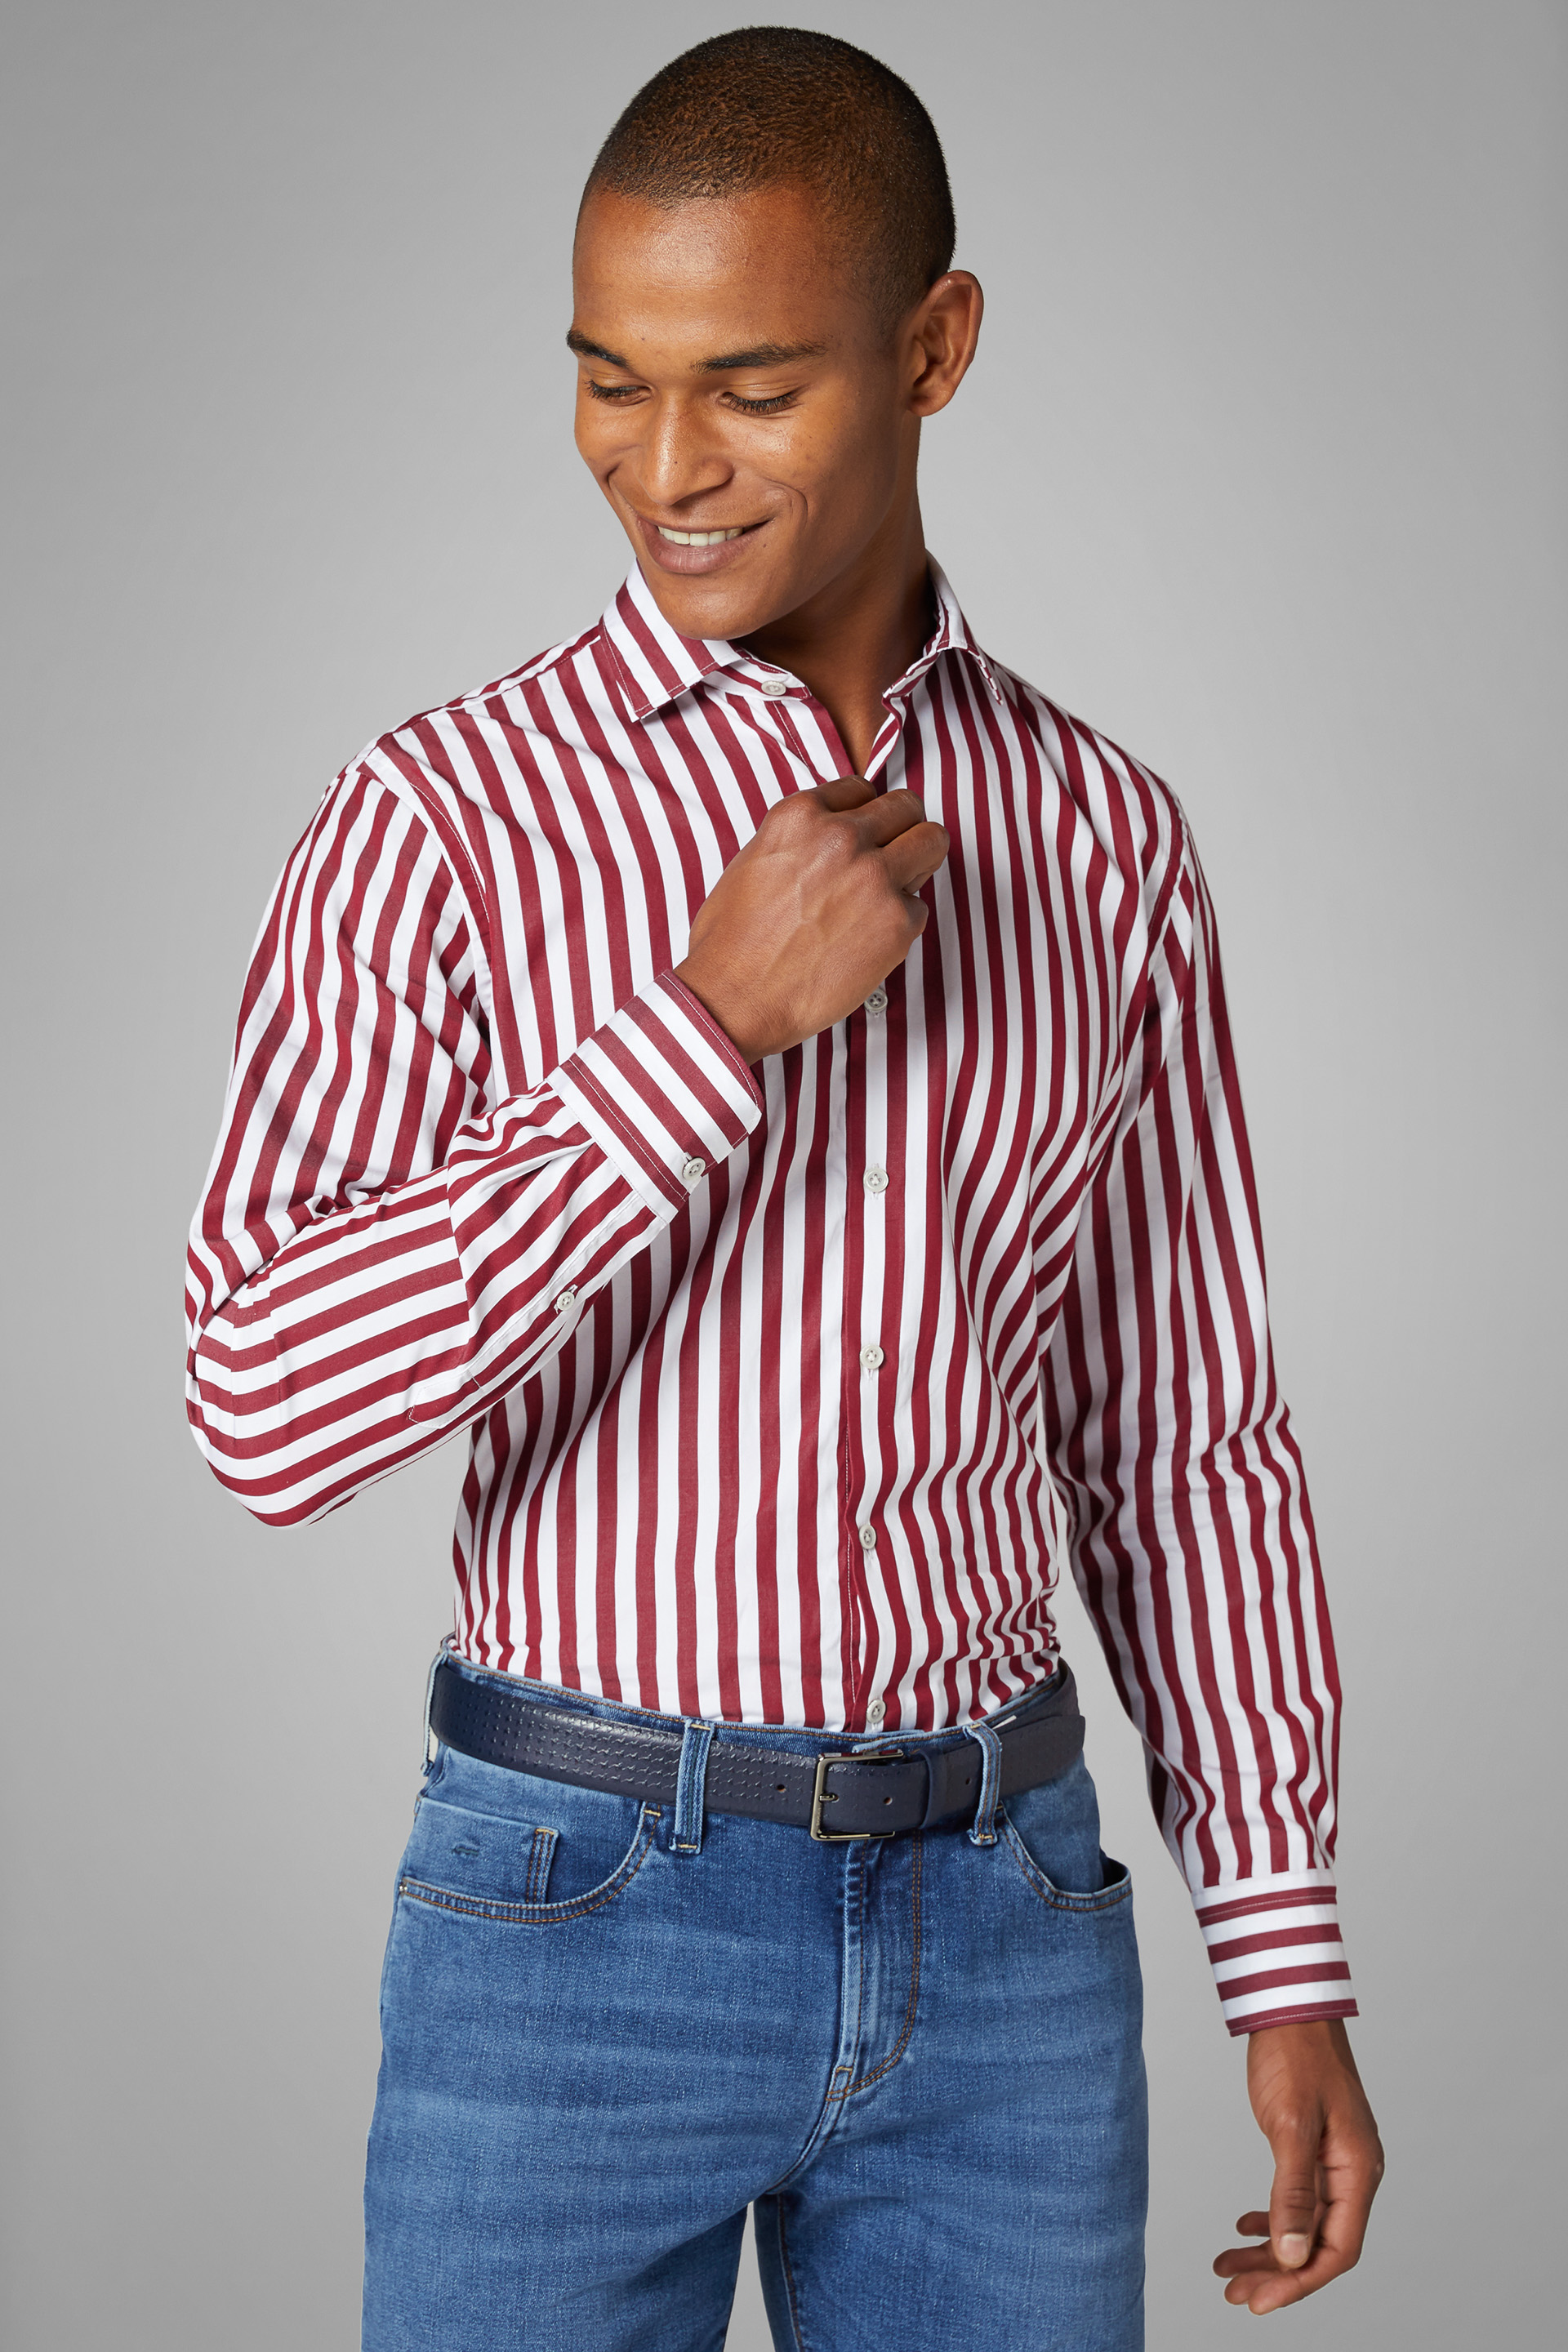 maroon striped shirt mens